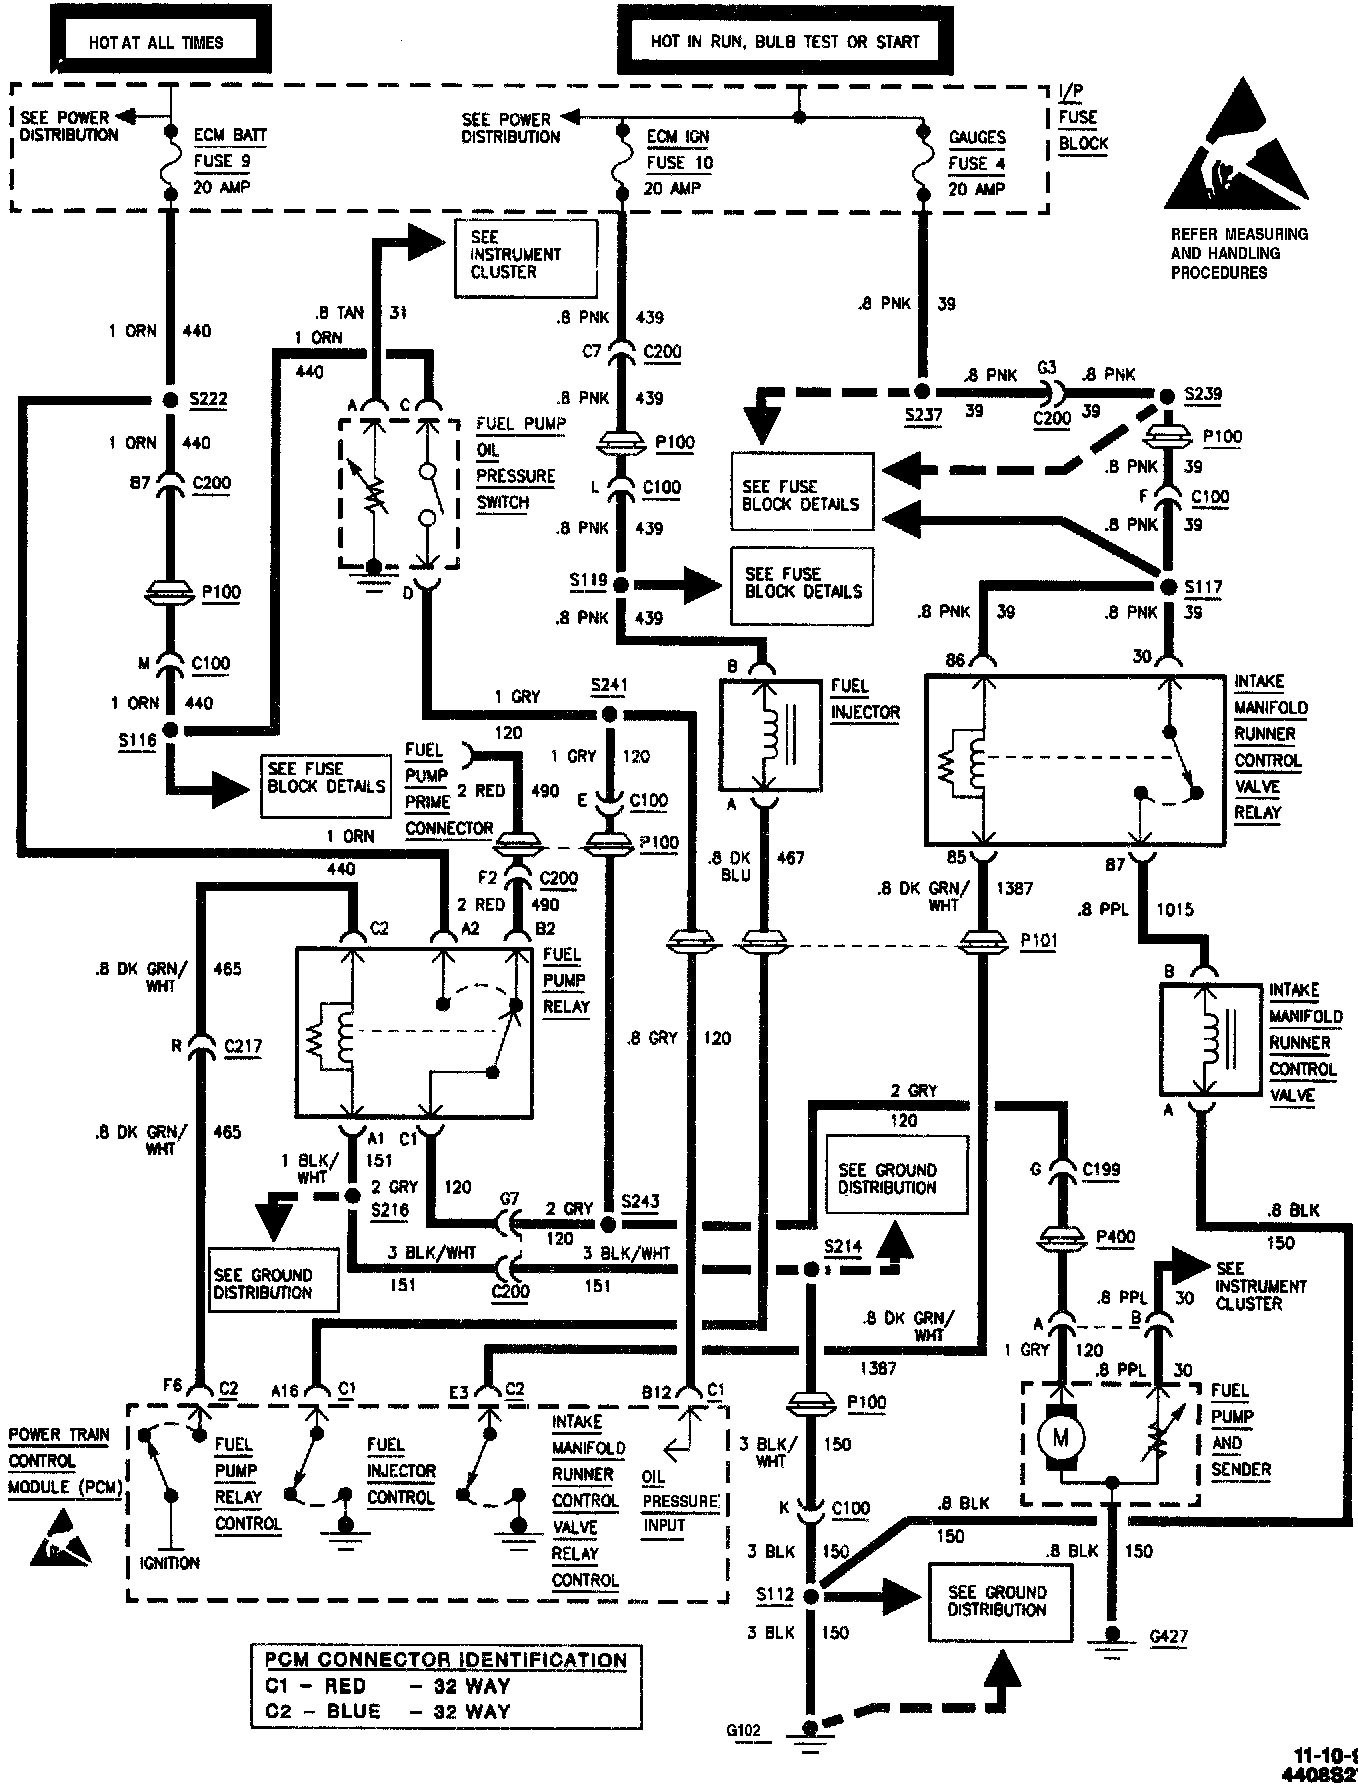 1991 Chevy S10 Blazer Diagram Chevrolet Wiring Diagrams Instructions 2002 Blazer Radio Wiring Diagram Auto